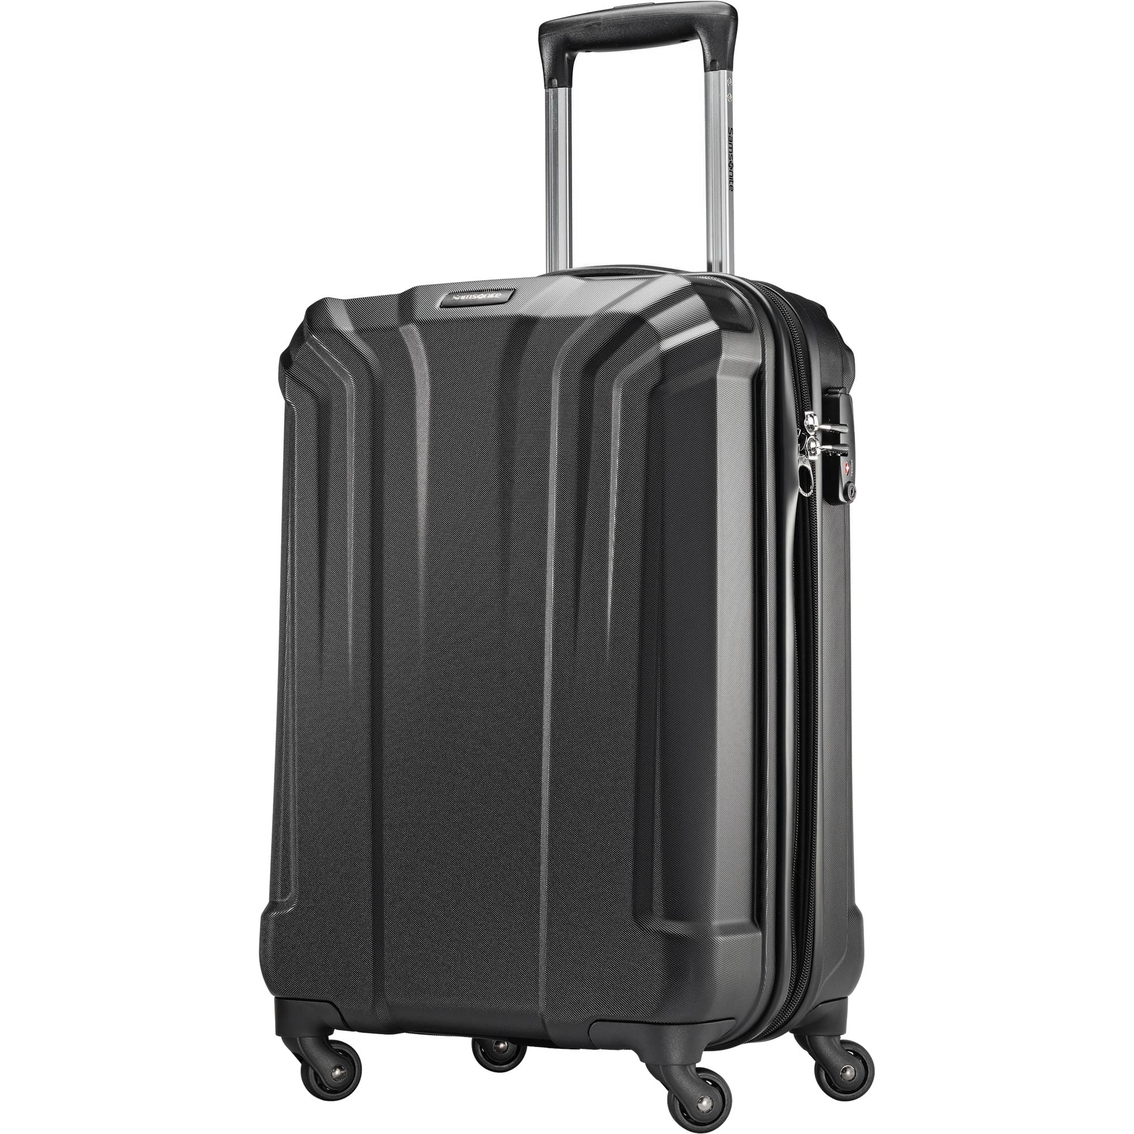 Samsonite Opto Pc 20 In. Hardside Spinner | Luggage | Clothing ...